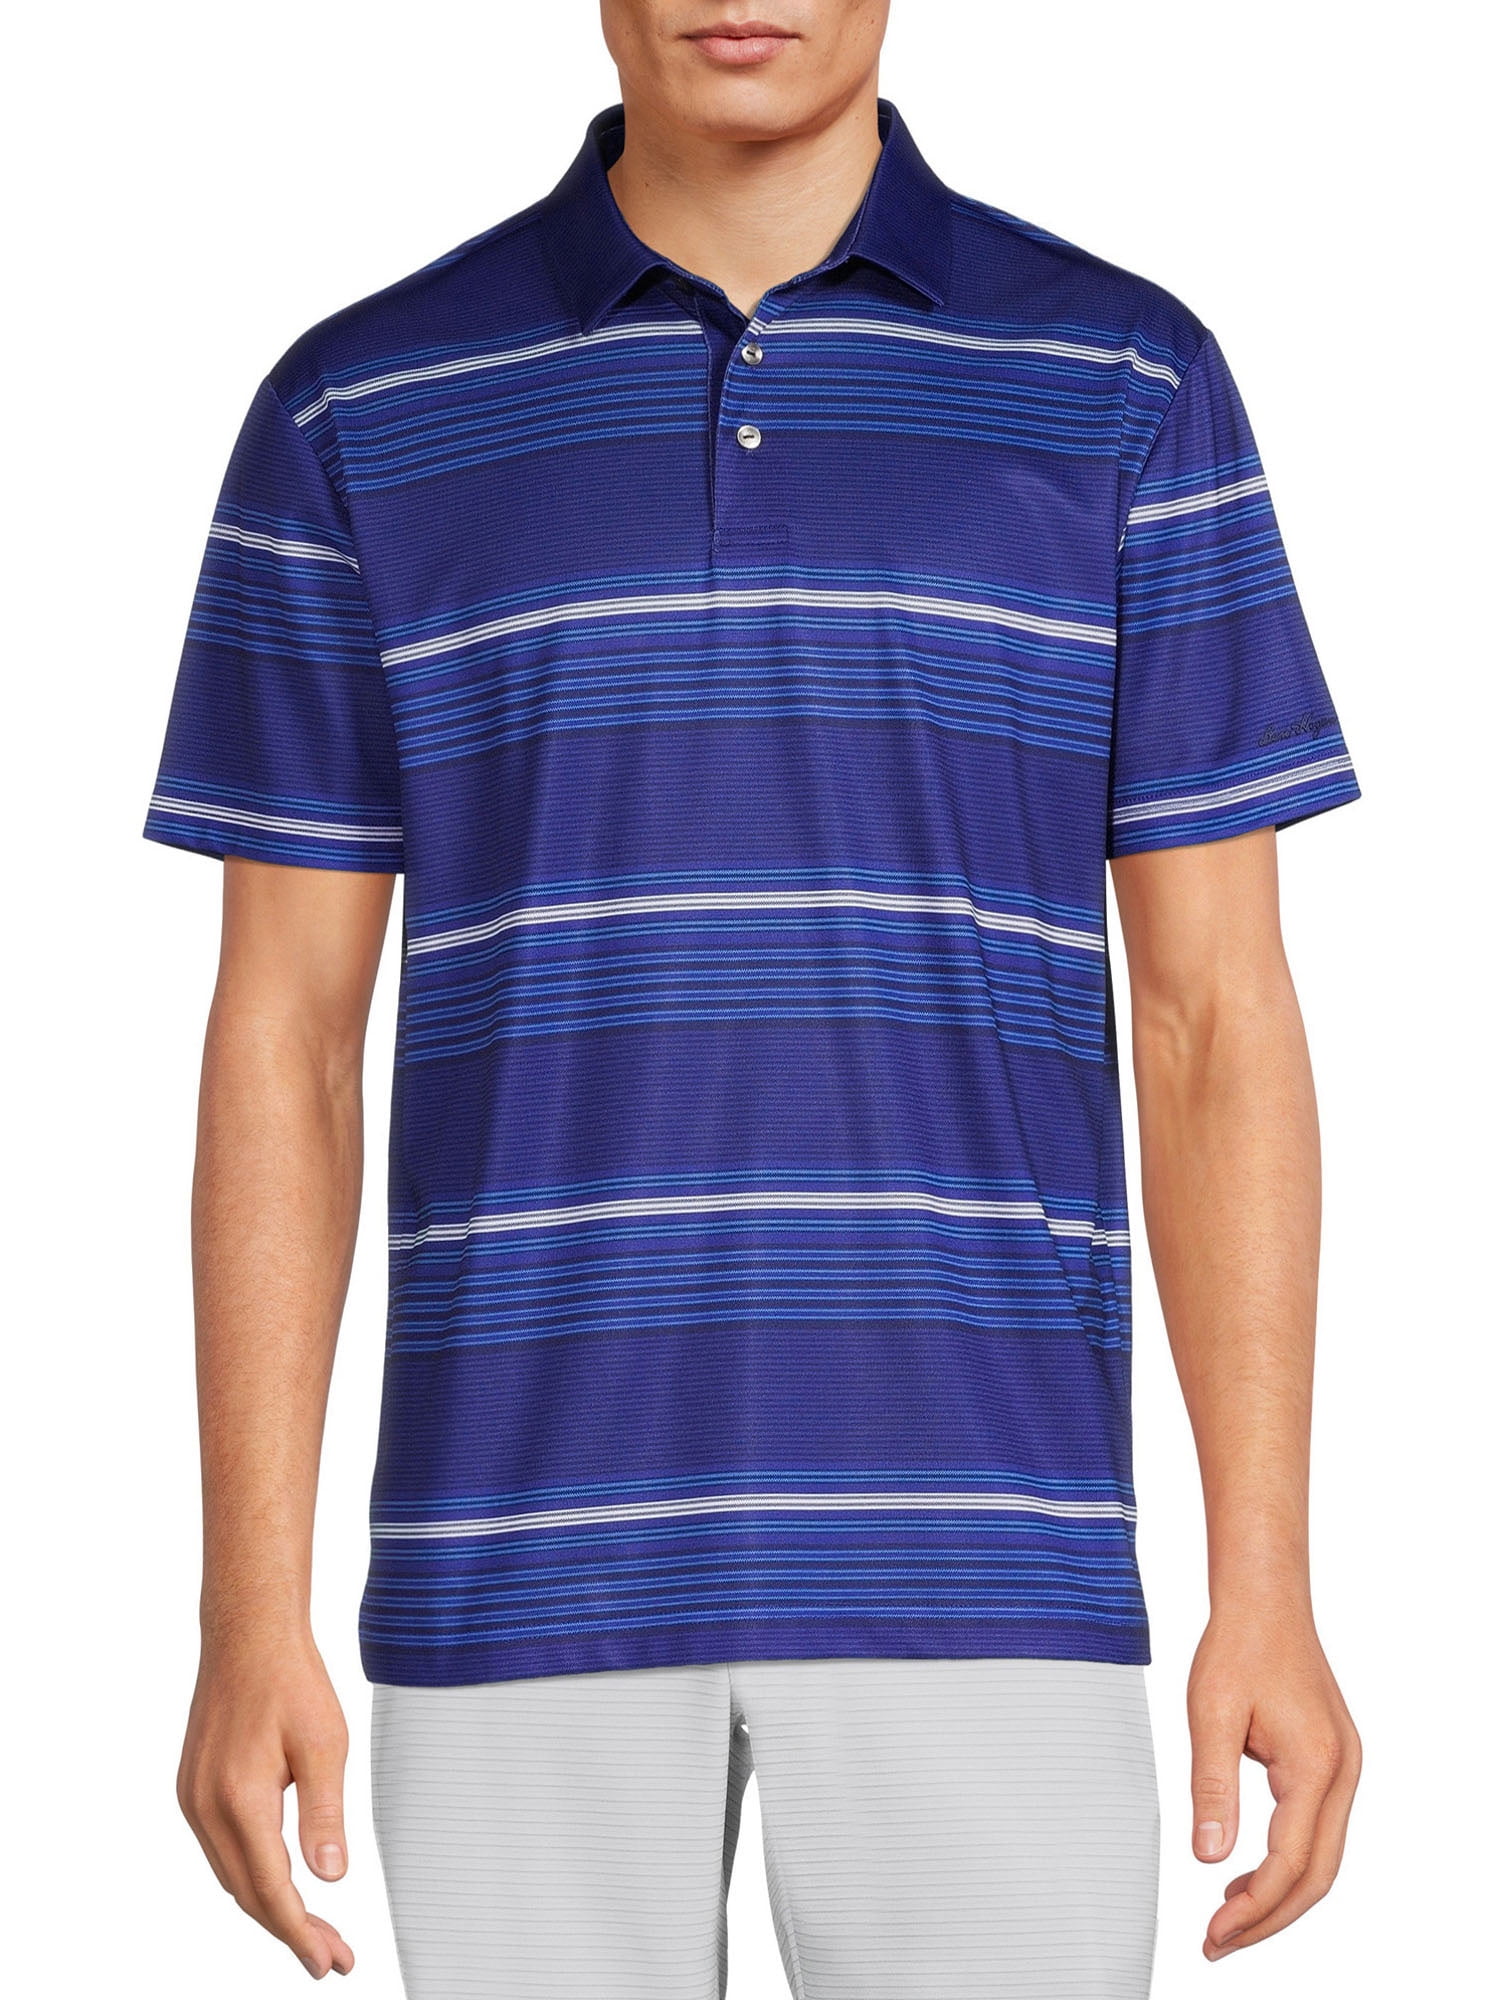 Ben Hogan Men's & Big Men's Performance Striped Golf Polo Shirt, Sizes S-5XL